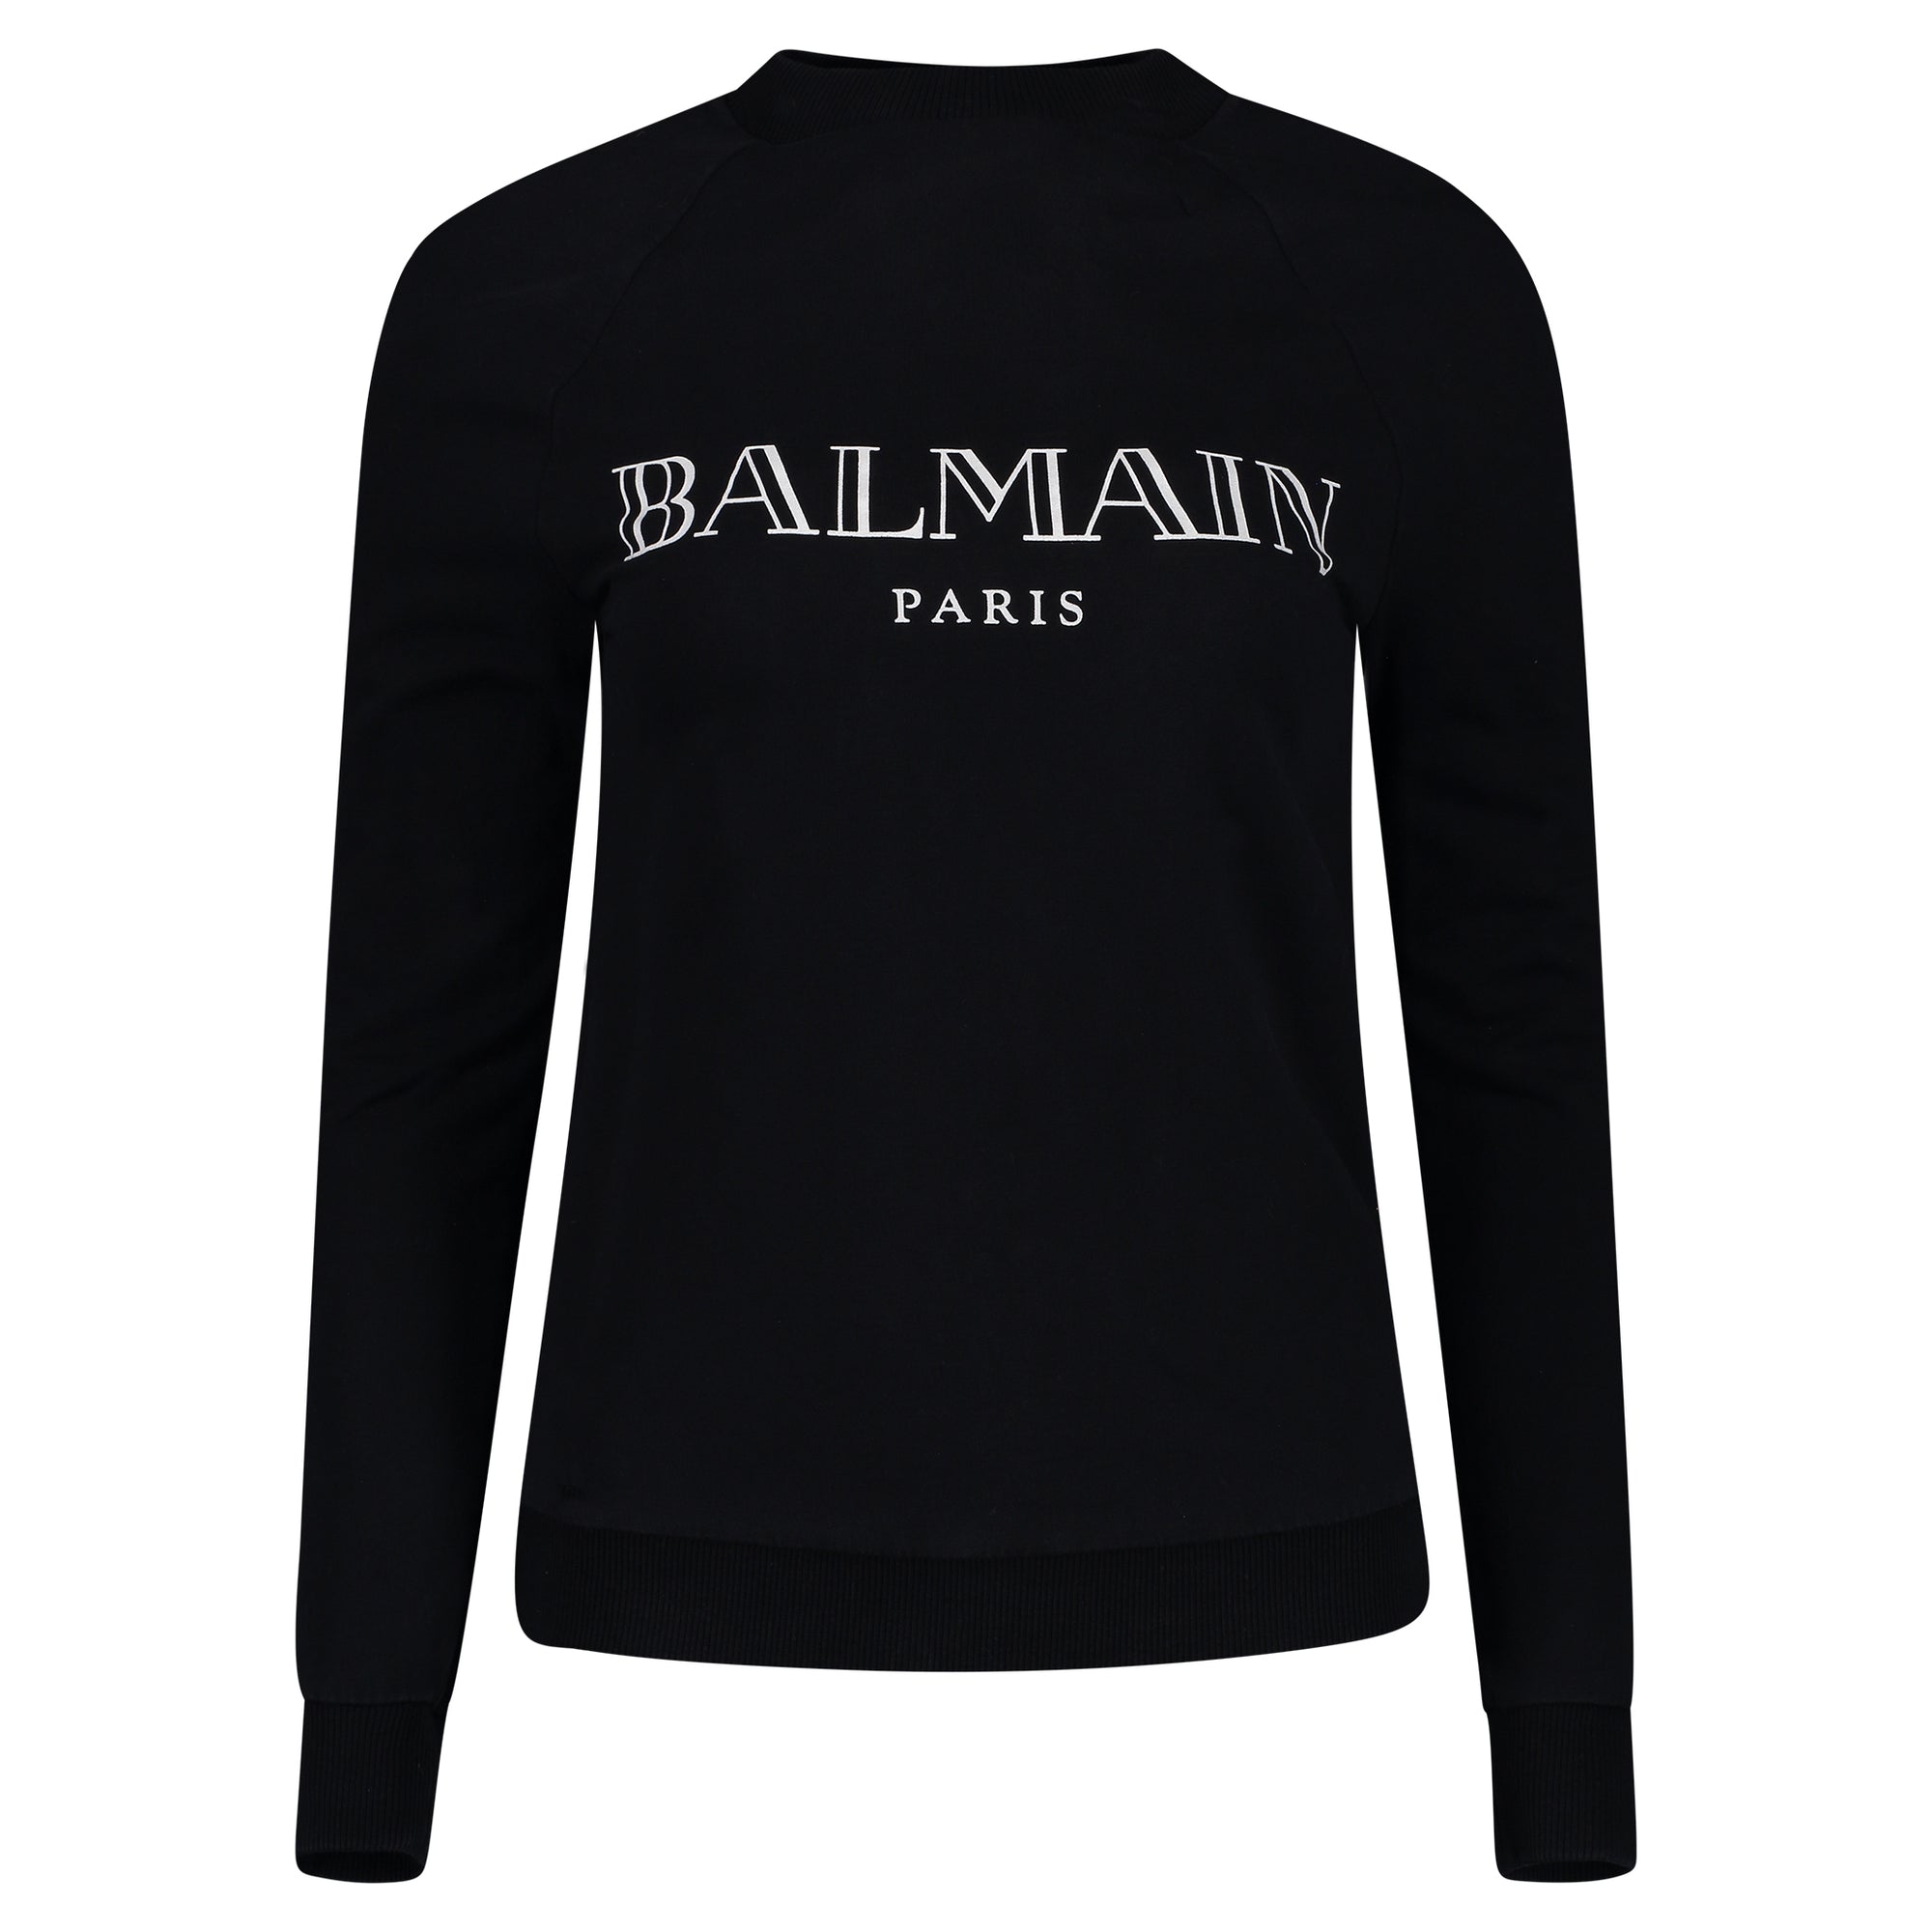 Balmain Paris Sweatshirt